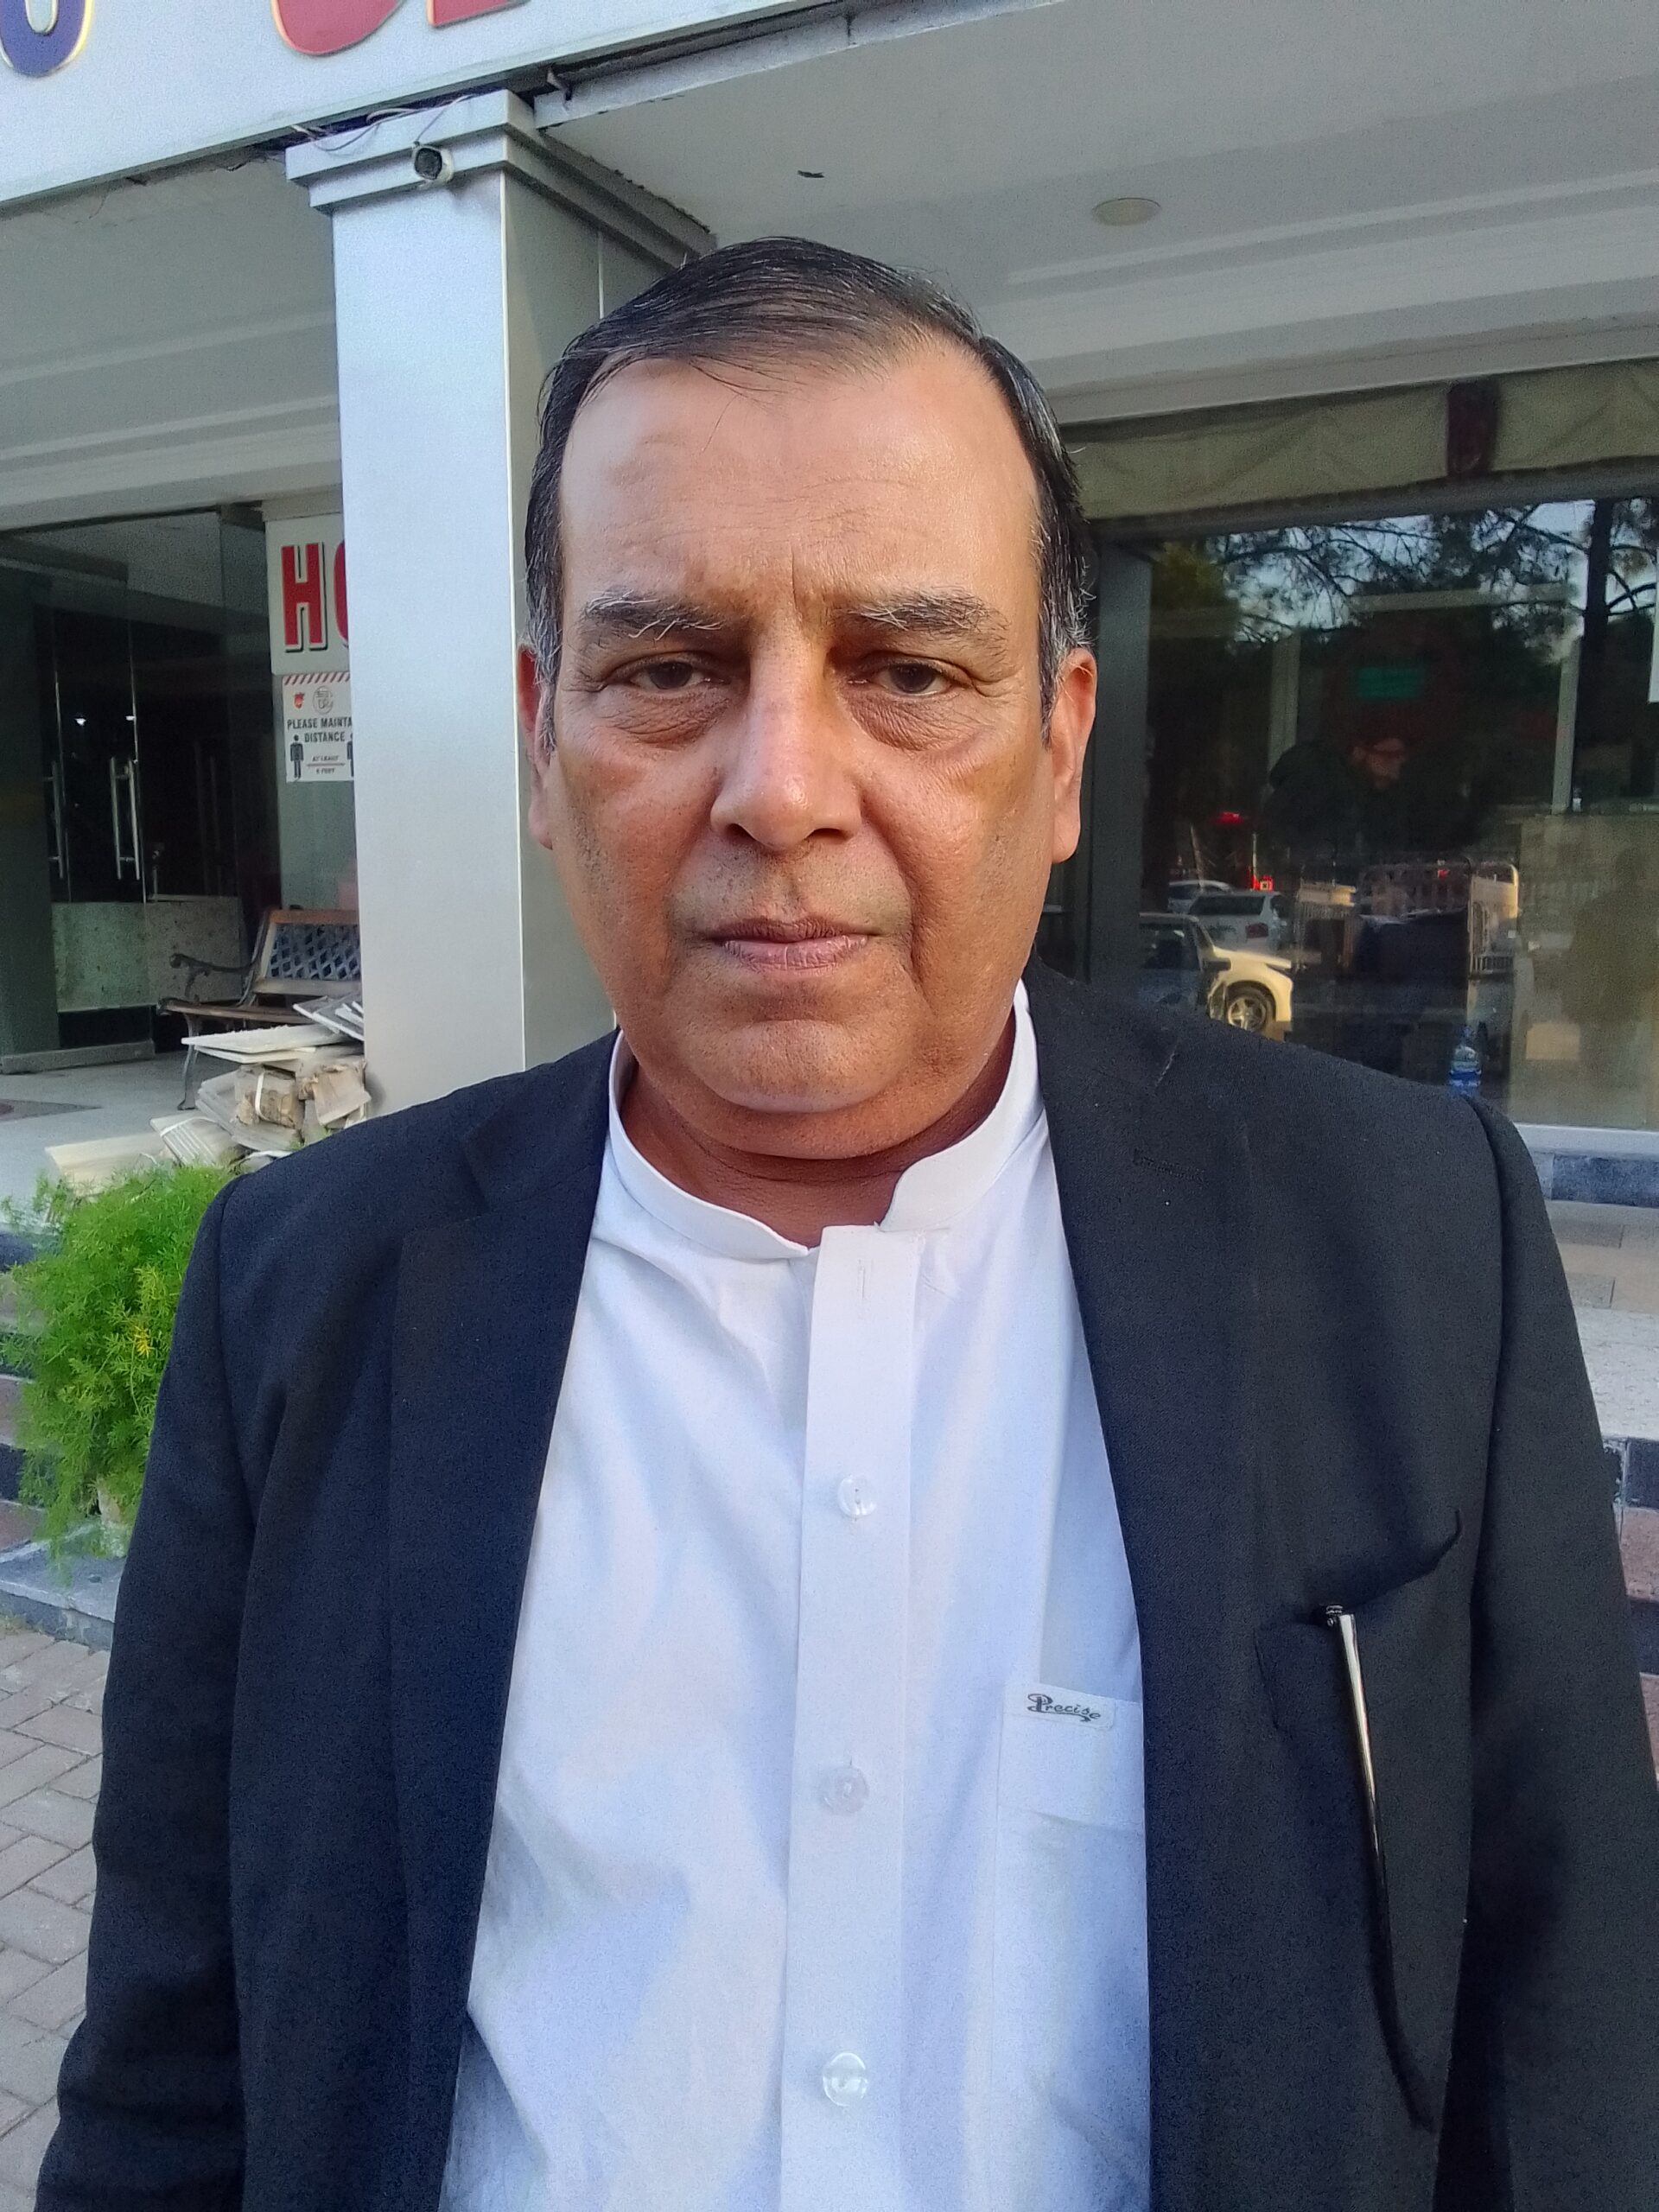 Mohsin Ali Shah, Senior Family & Divorce Law Consultant